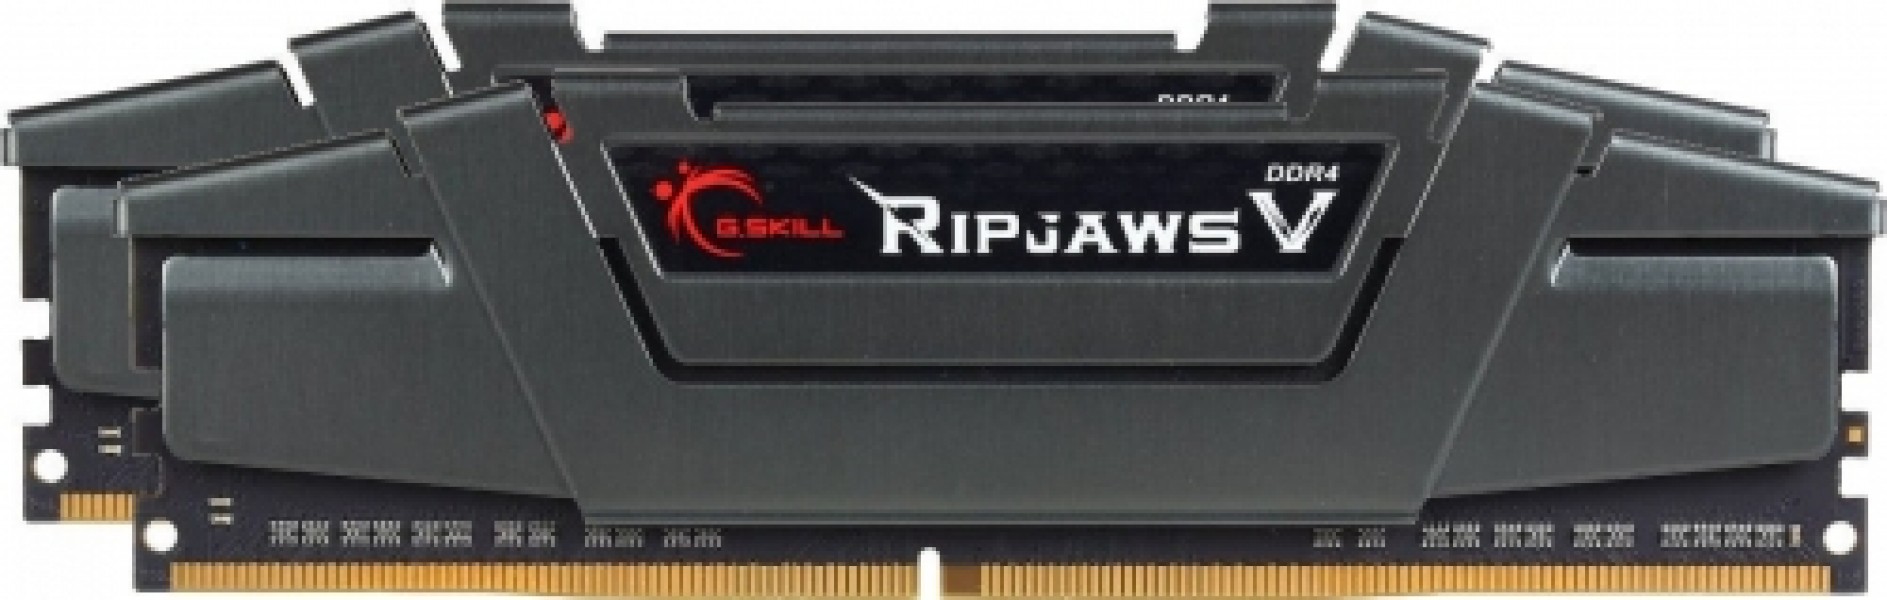 G.SKILL RipjawsV rev.2 16GB 3200MHz CL16 DDR4 XMP2 KIT OF 2 F4-3200C16D-16GVKB